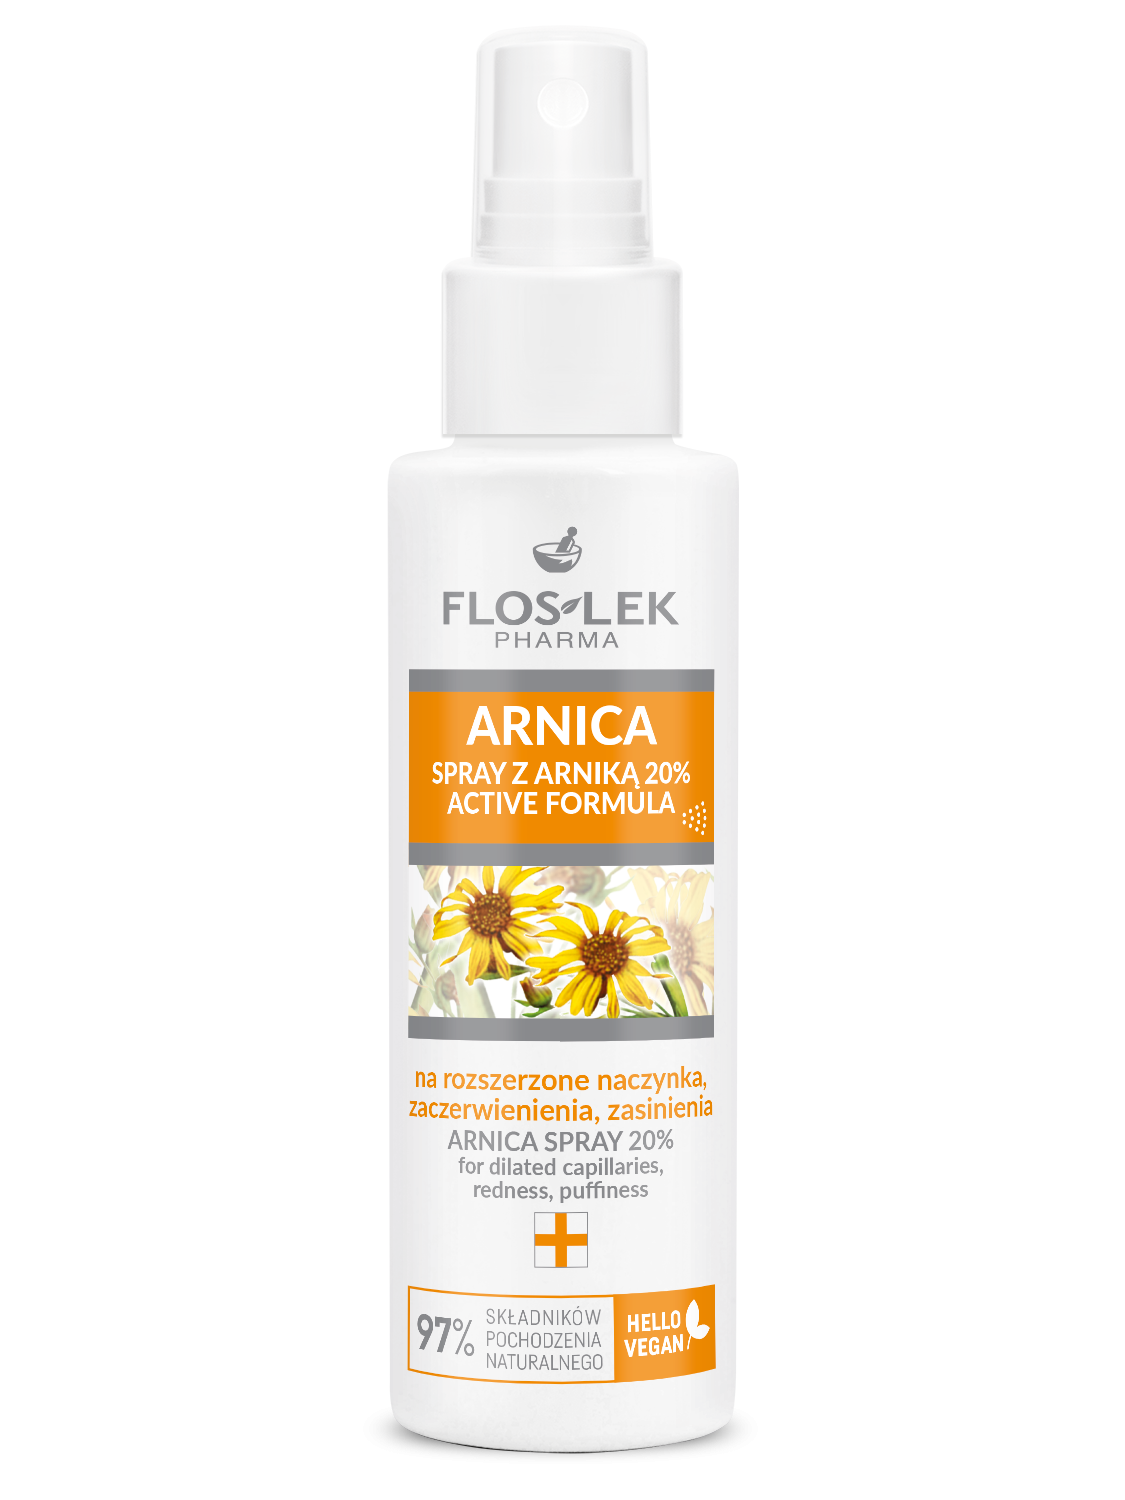 ARNICA® Spray 20% for dilated capillaries, redness, puffiness - 100 ml - Floslek